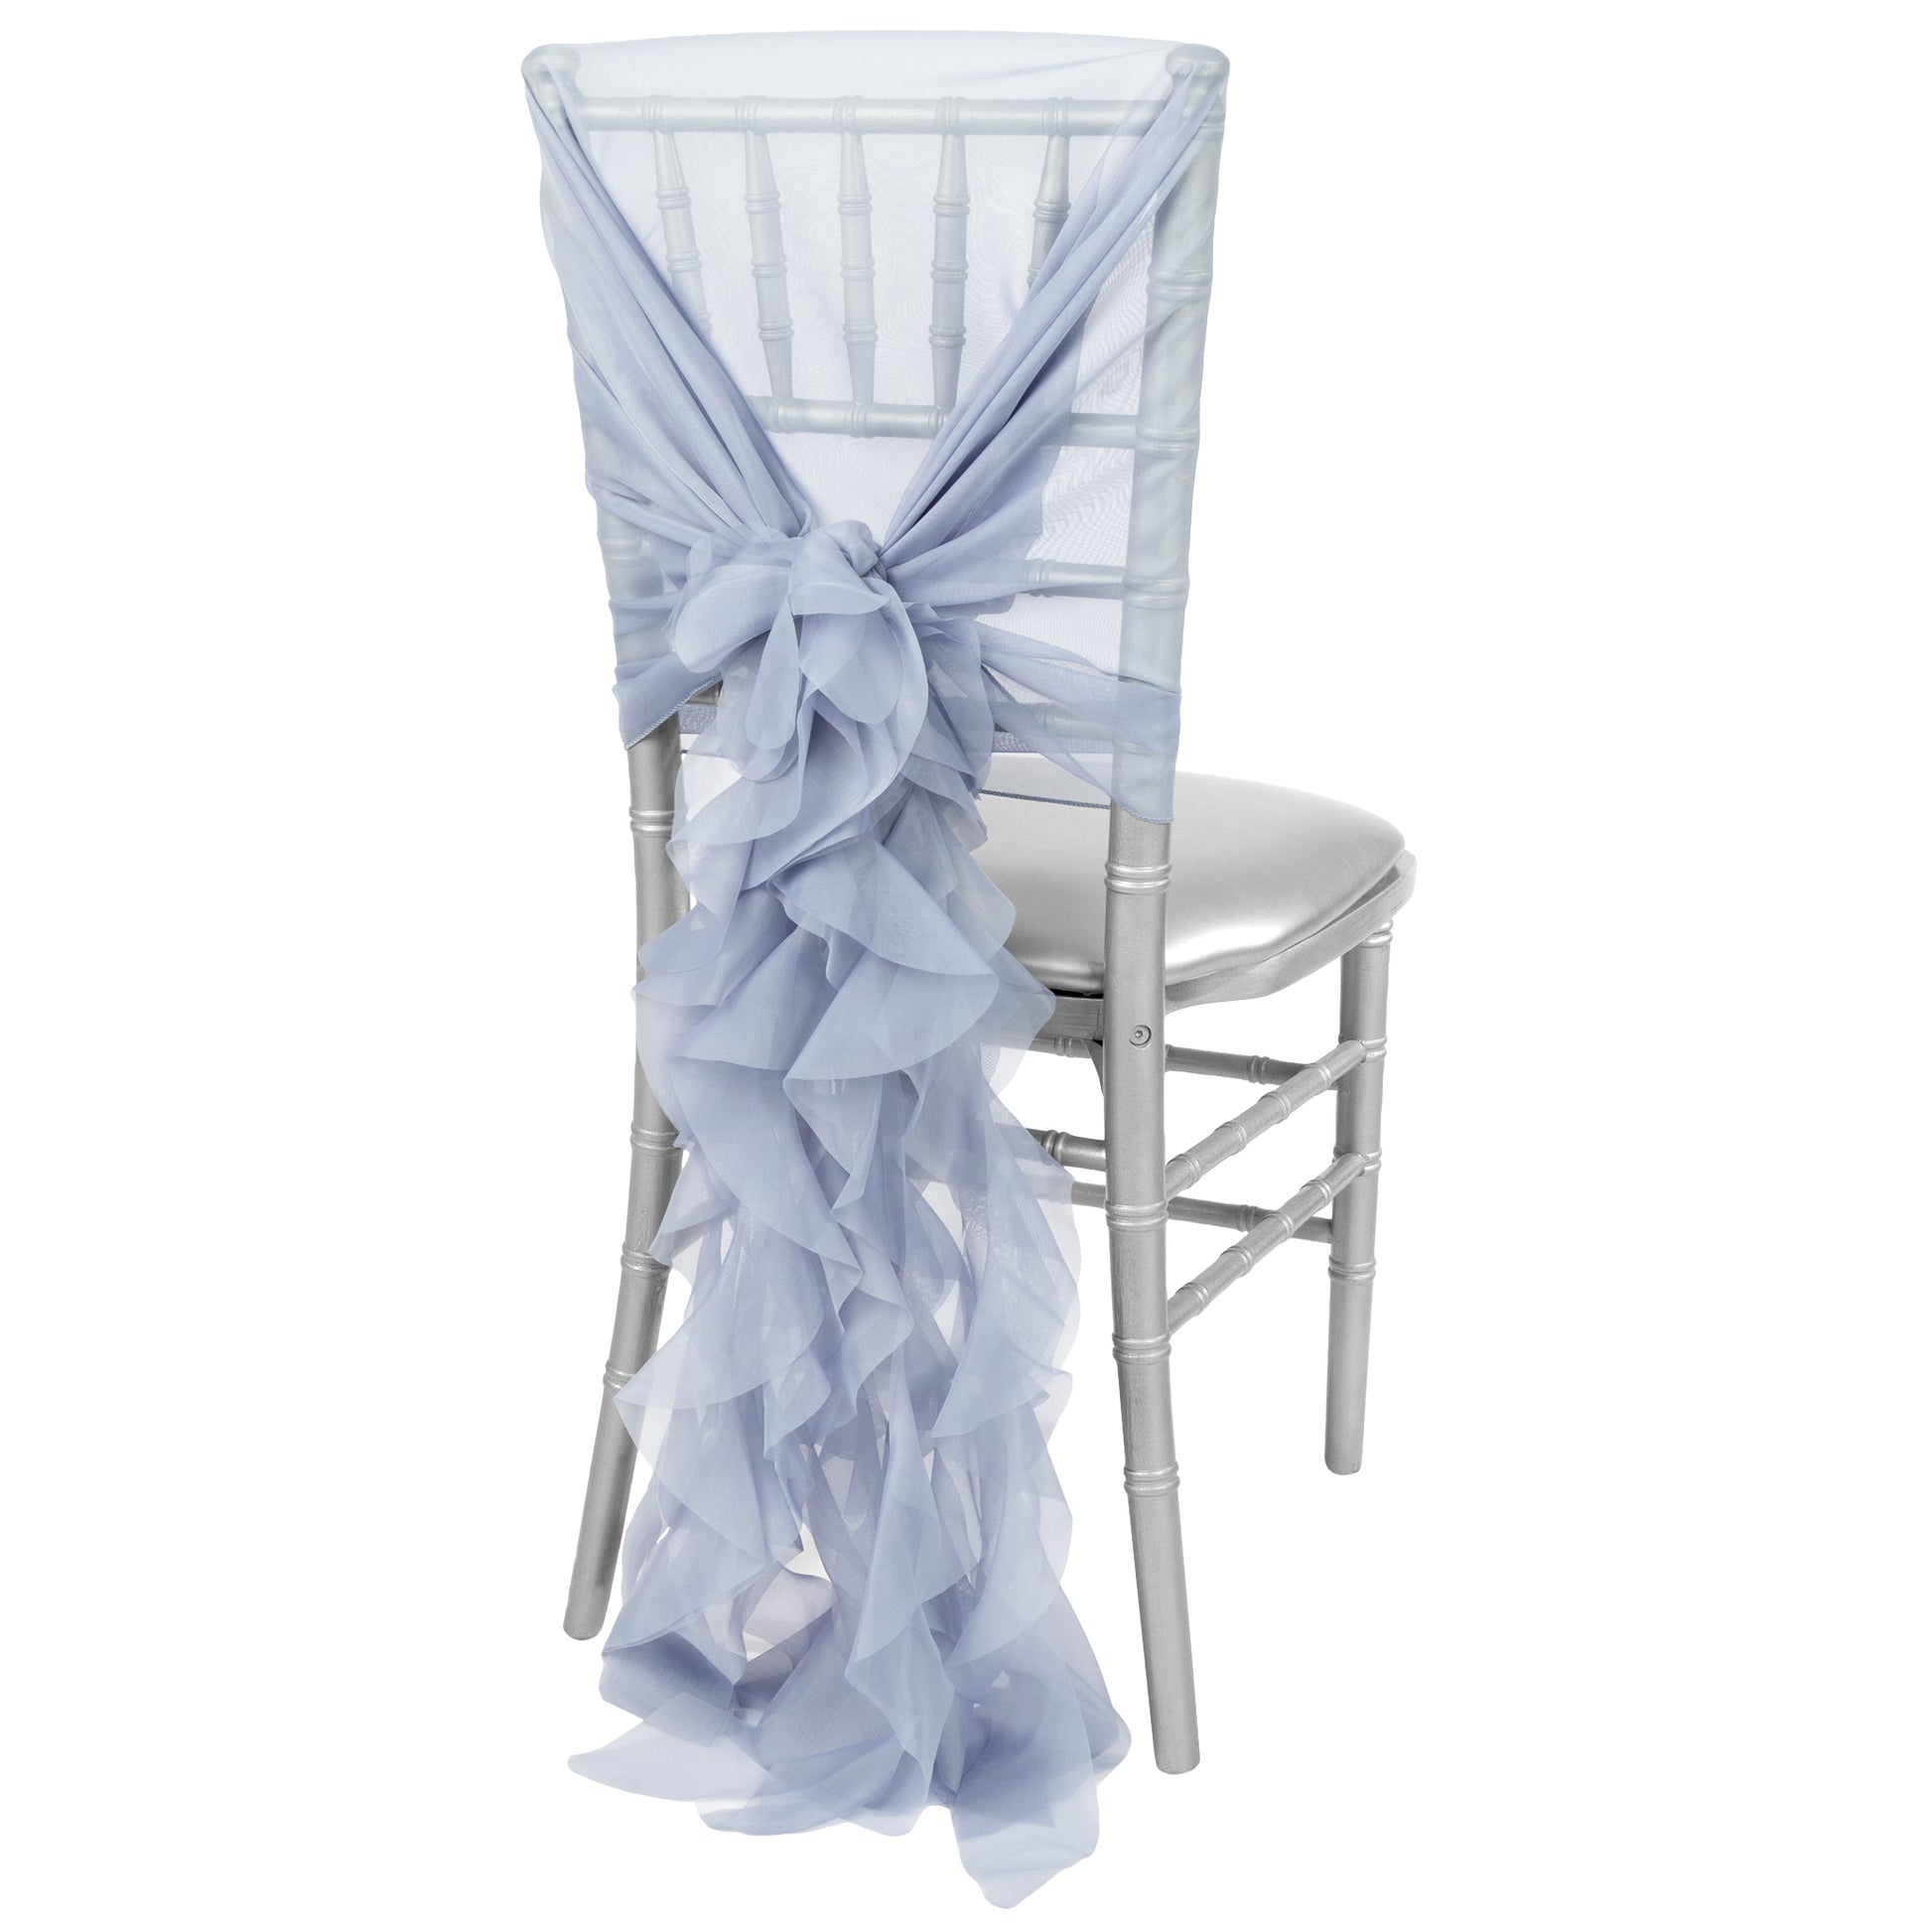 1 Set of Soft Curly Willow Ruffles Chair Sash & Cap - Dusty Blue - CV Linens